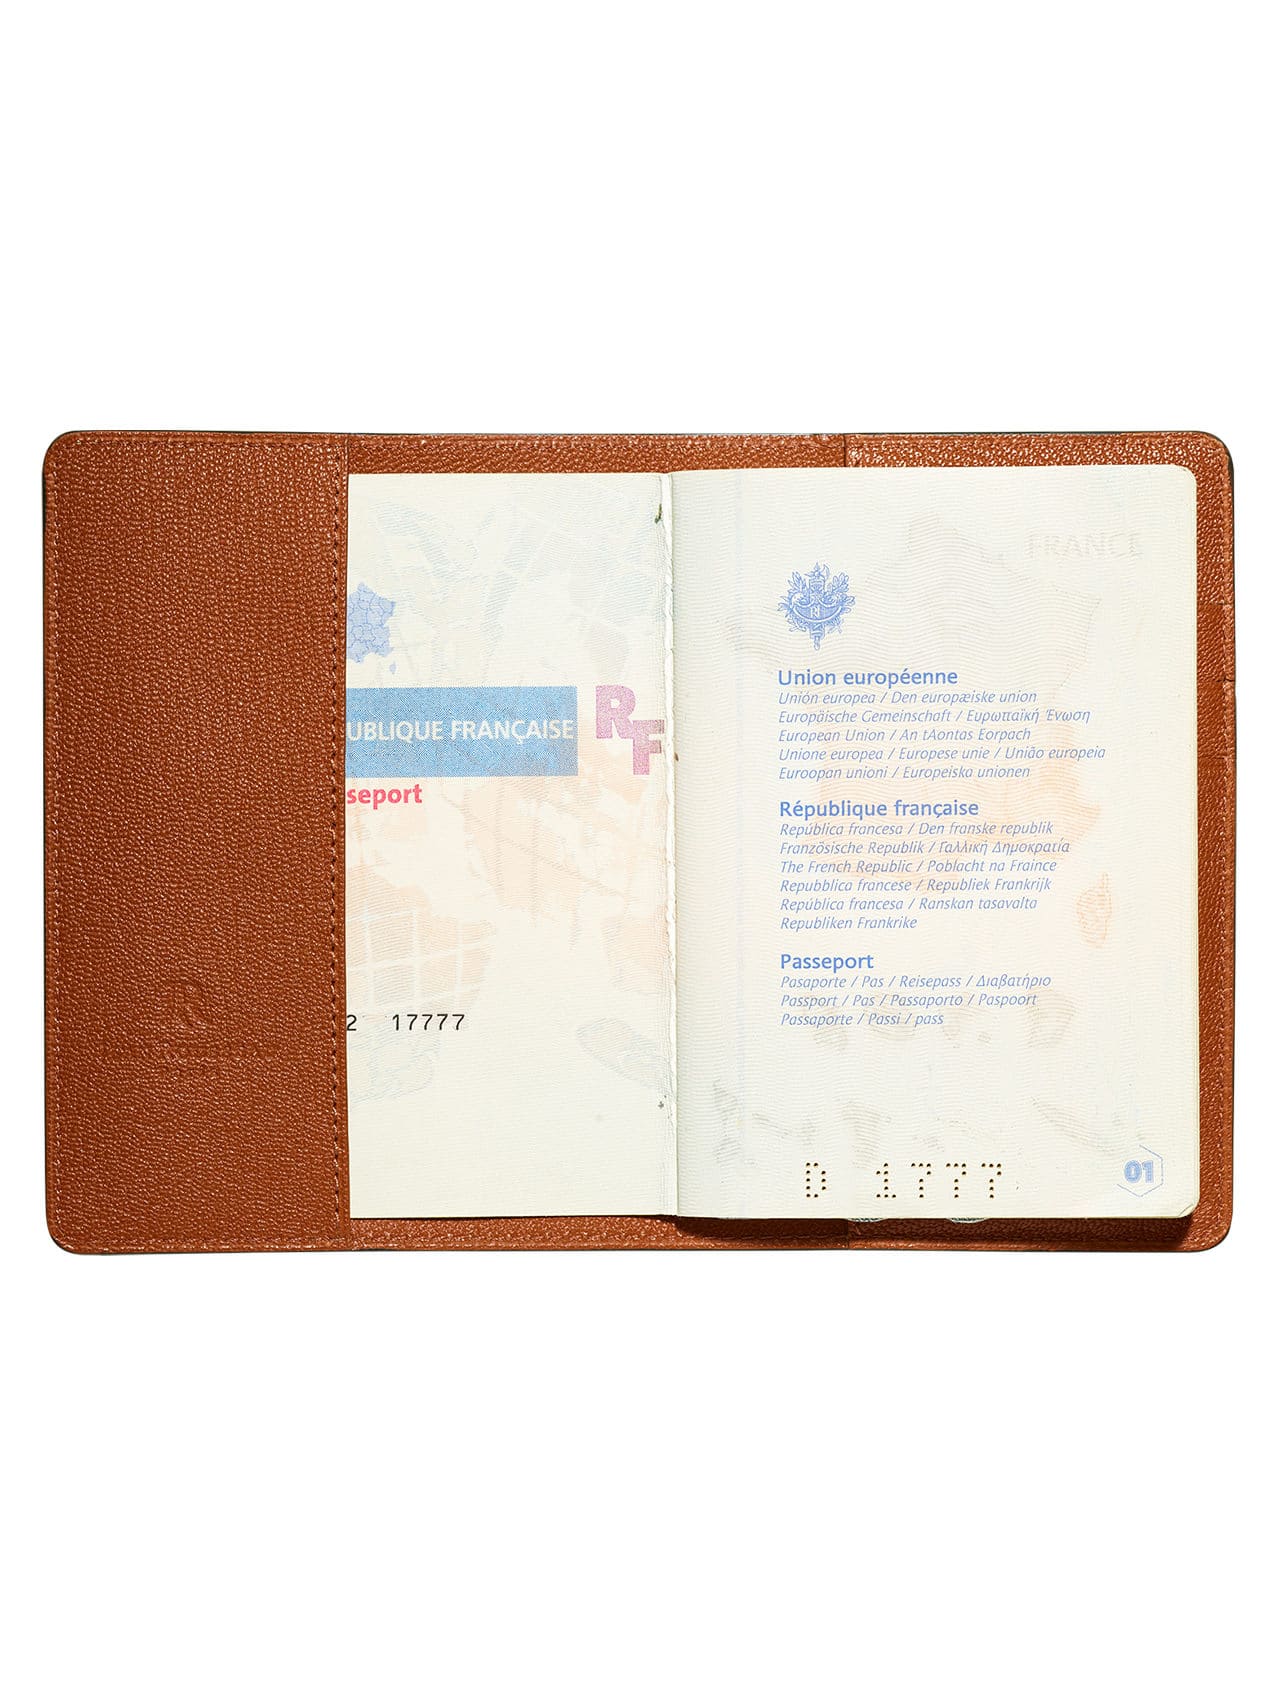 jean rousseau watch strap green card holder passport